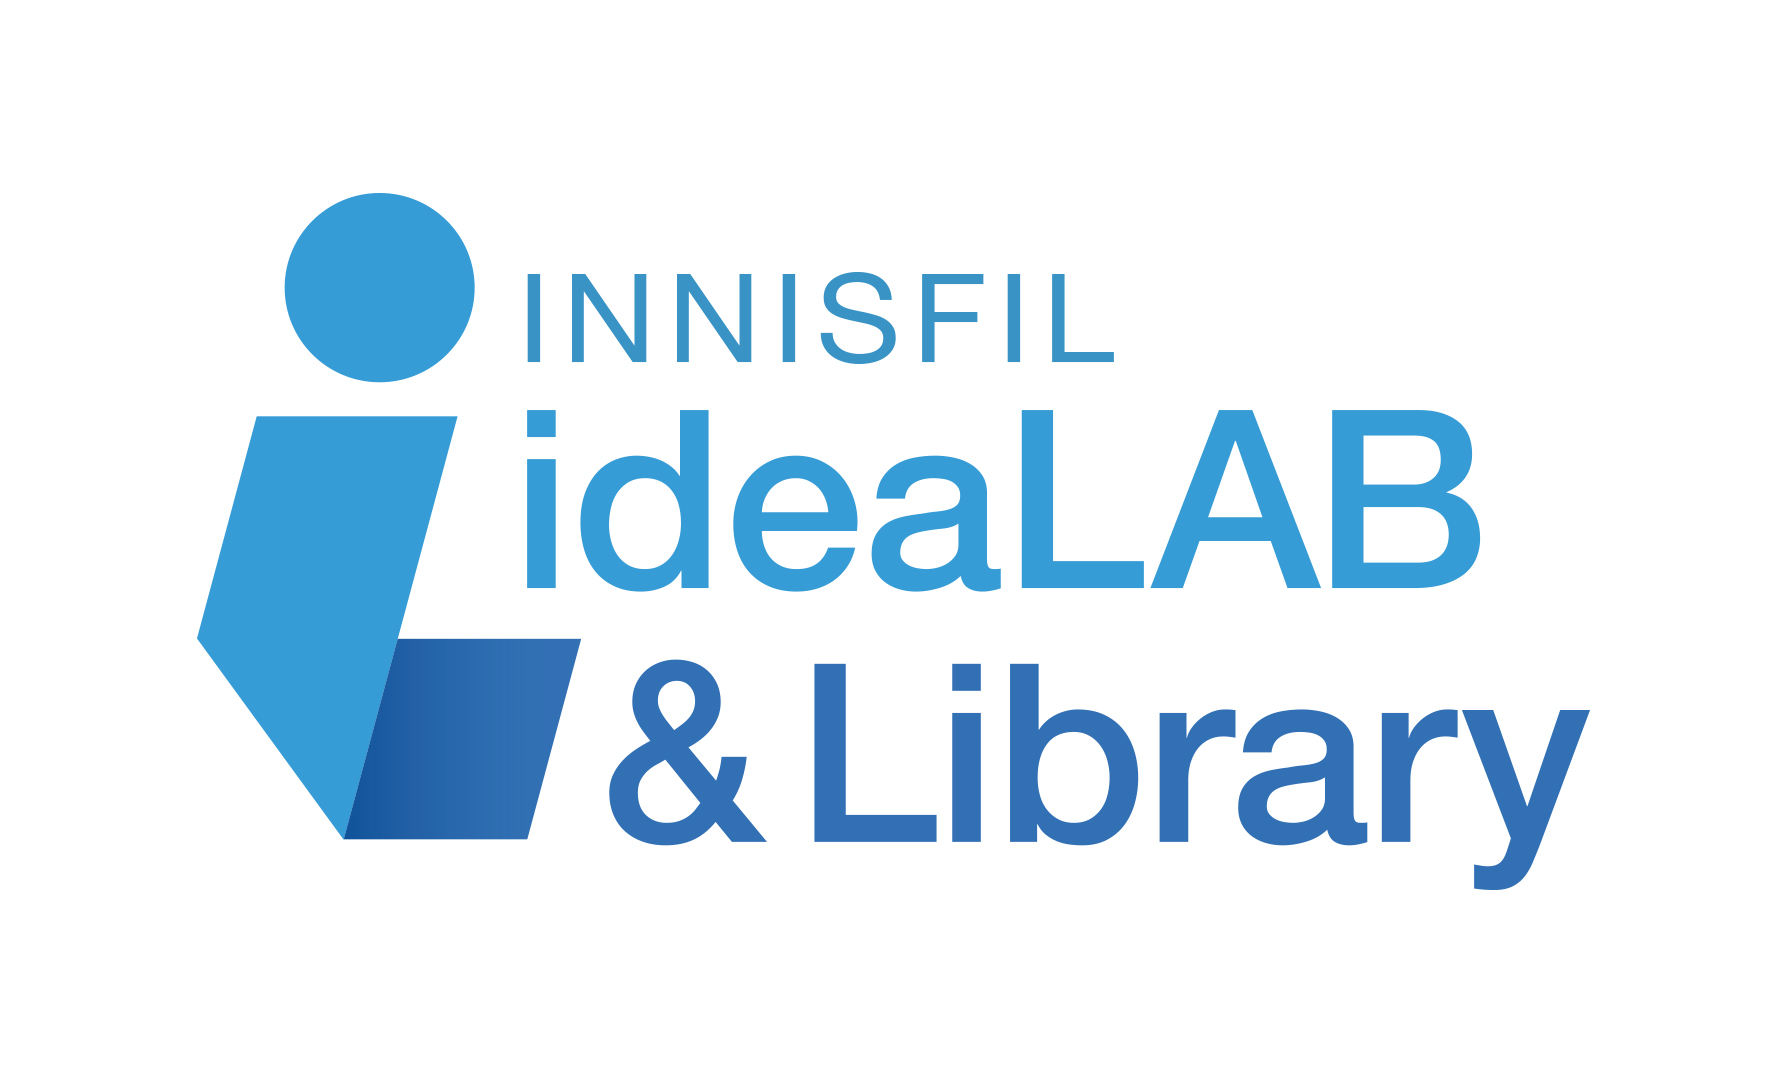 Innisfil ideaLAB & Library